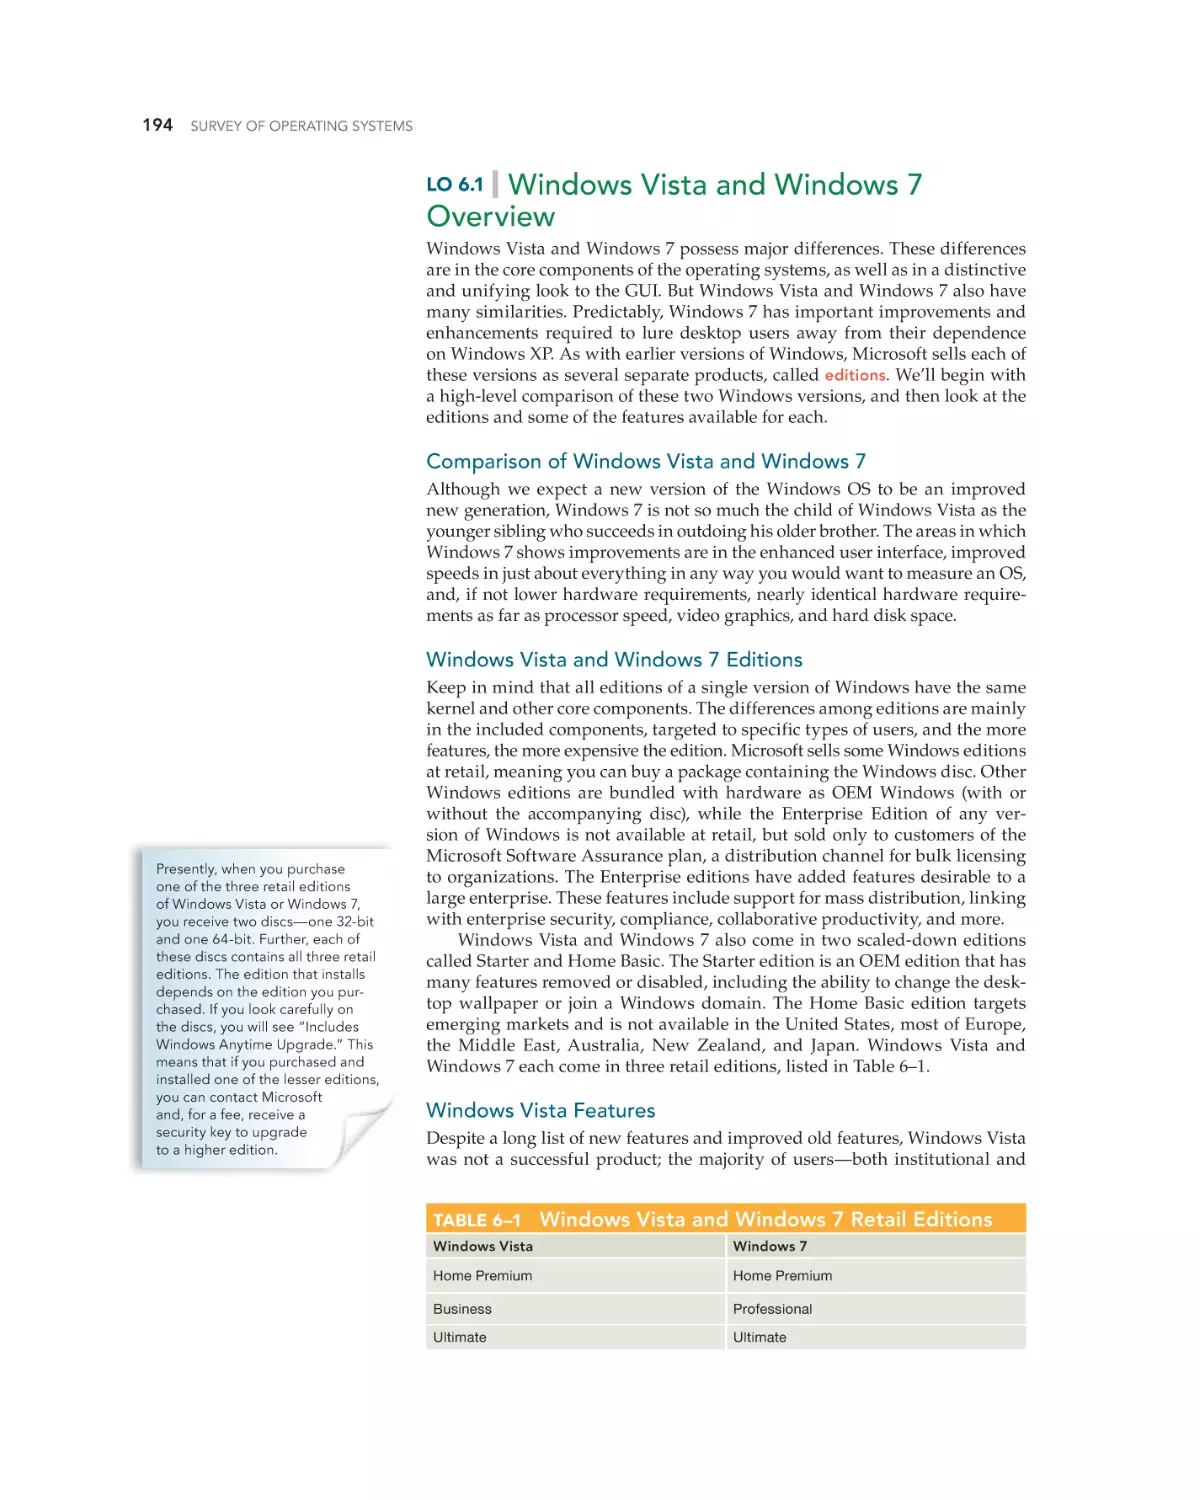 Windows Vista and Windows 7 Overview
Comparison of Windows Vista and Windows 7
Windows Vista and Windows 7 Editions
Windows Vista Features